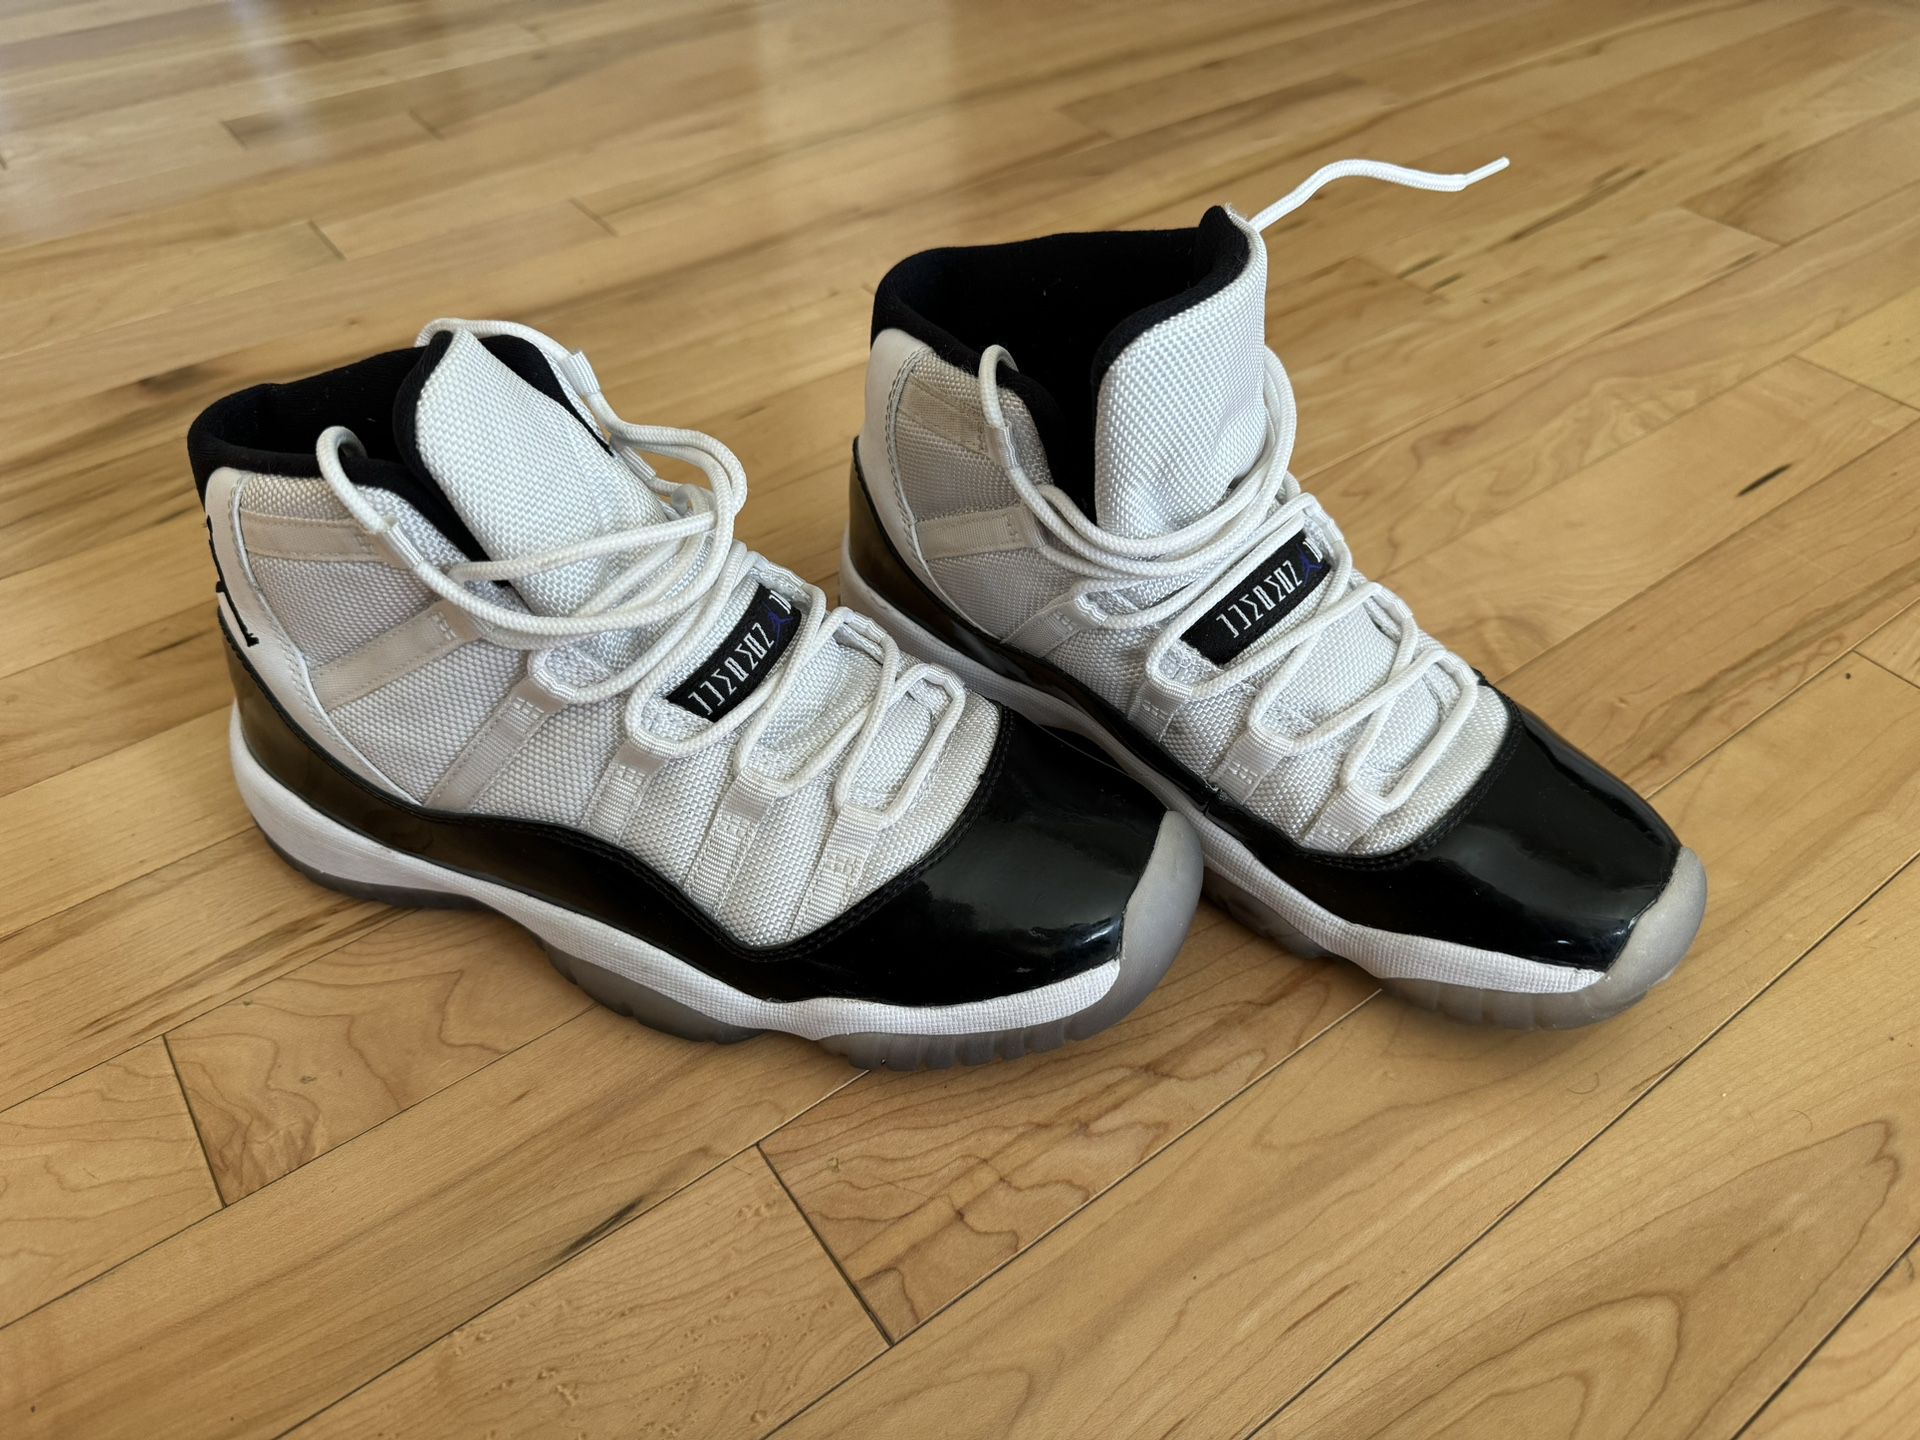 Nike Air Jordan 11 Retro Concord Shoes